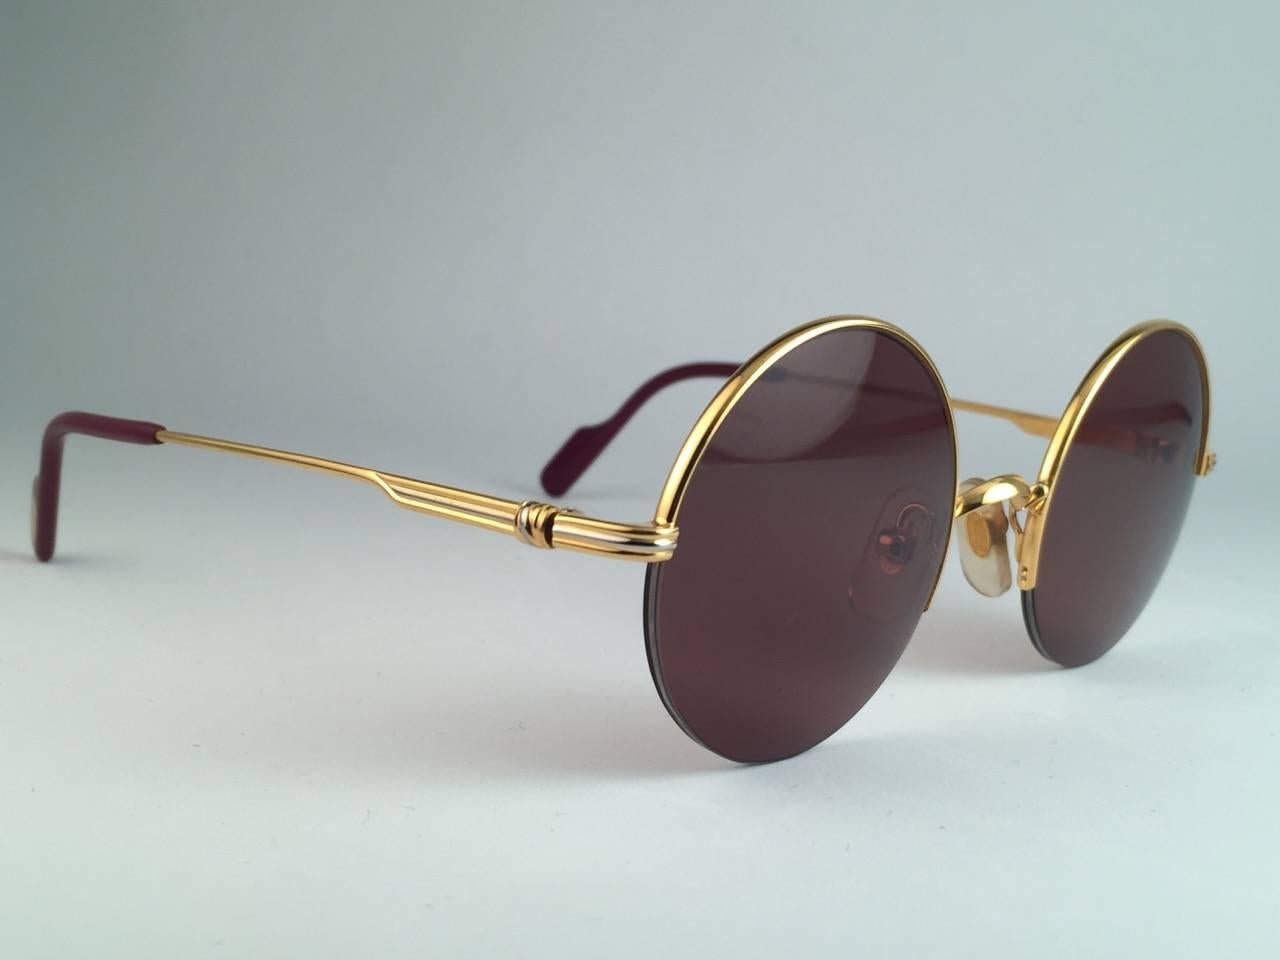 45mm round sunglasses